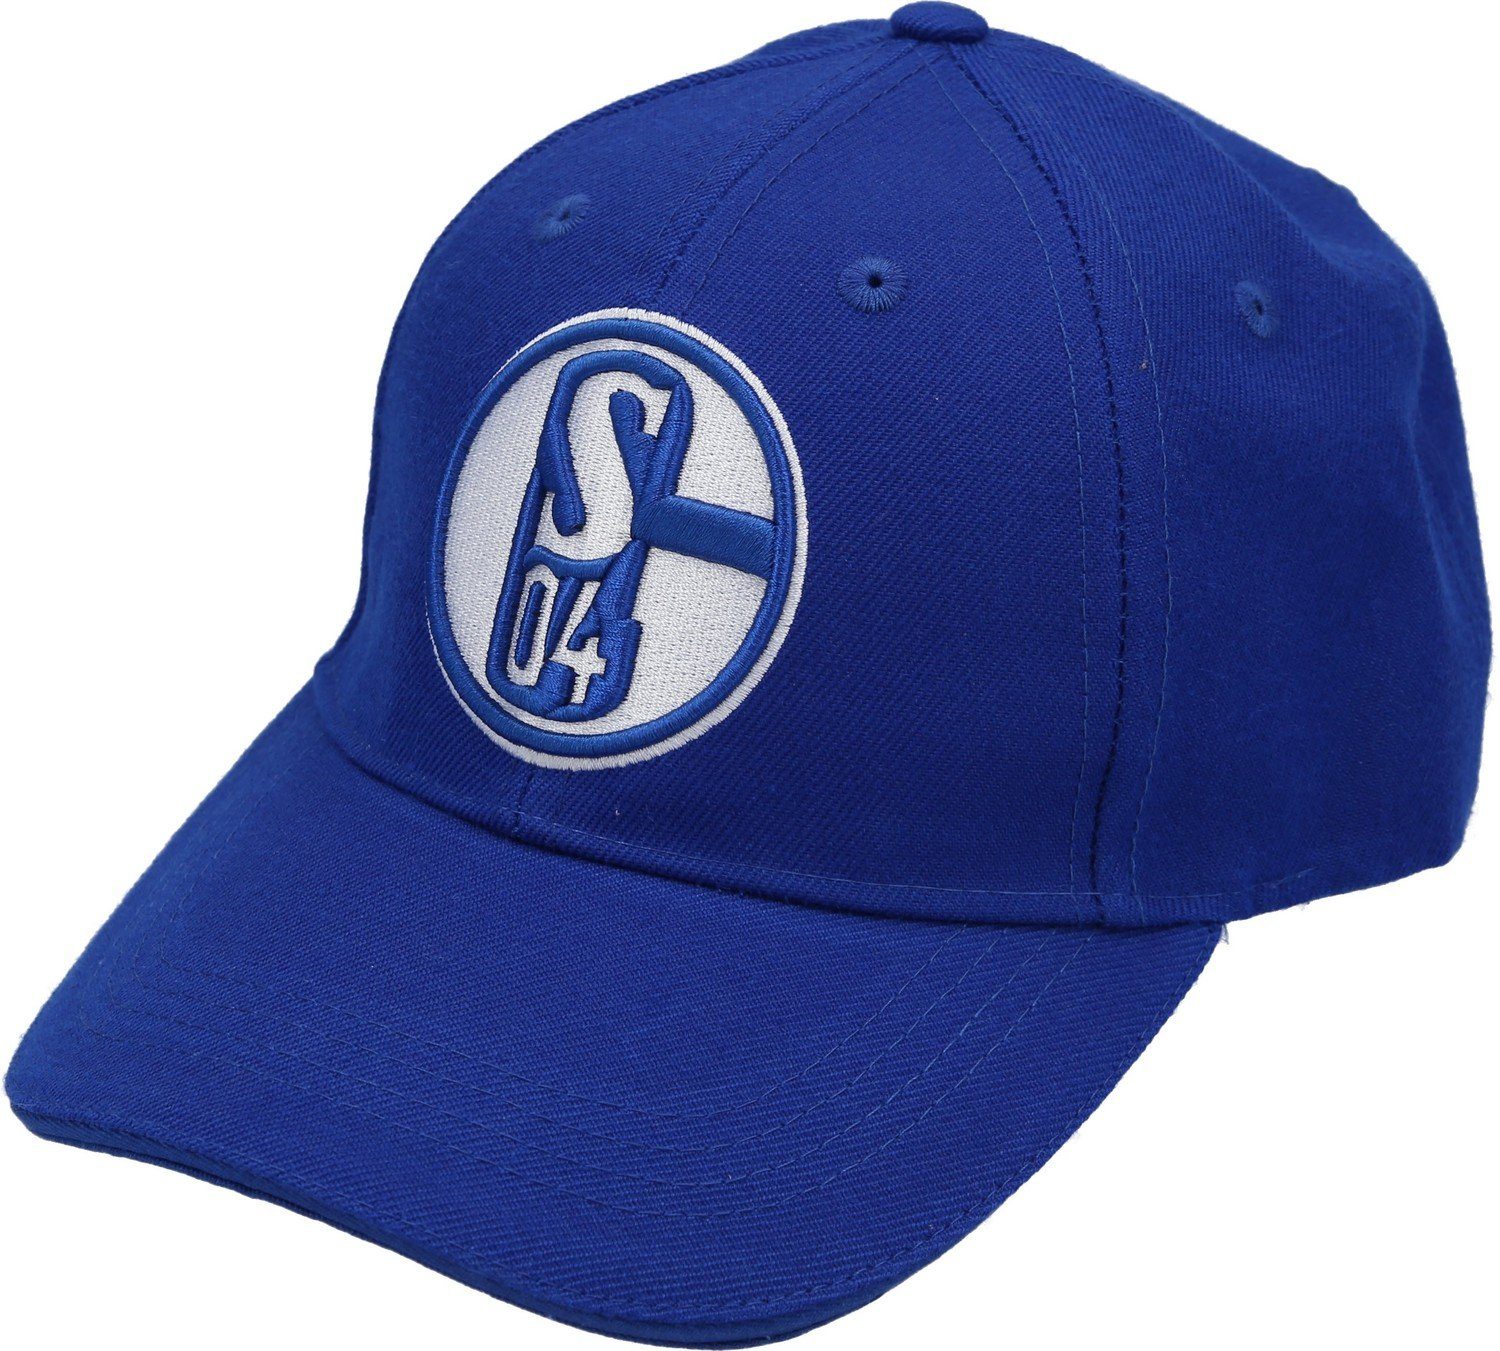 königsblau Baseball 04 FC 04 Cap Schalke Schalke FC Cap